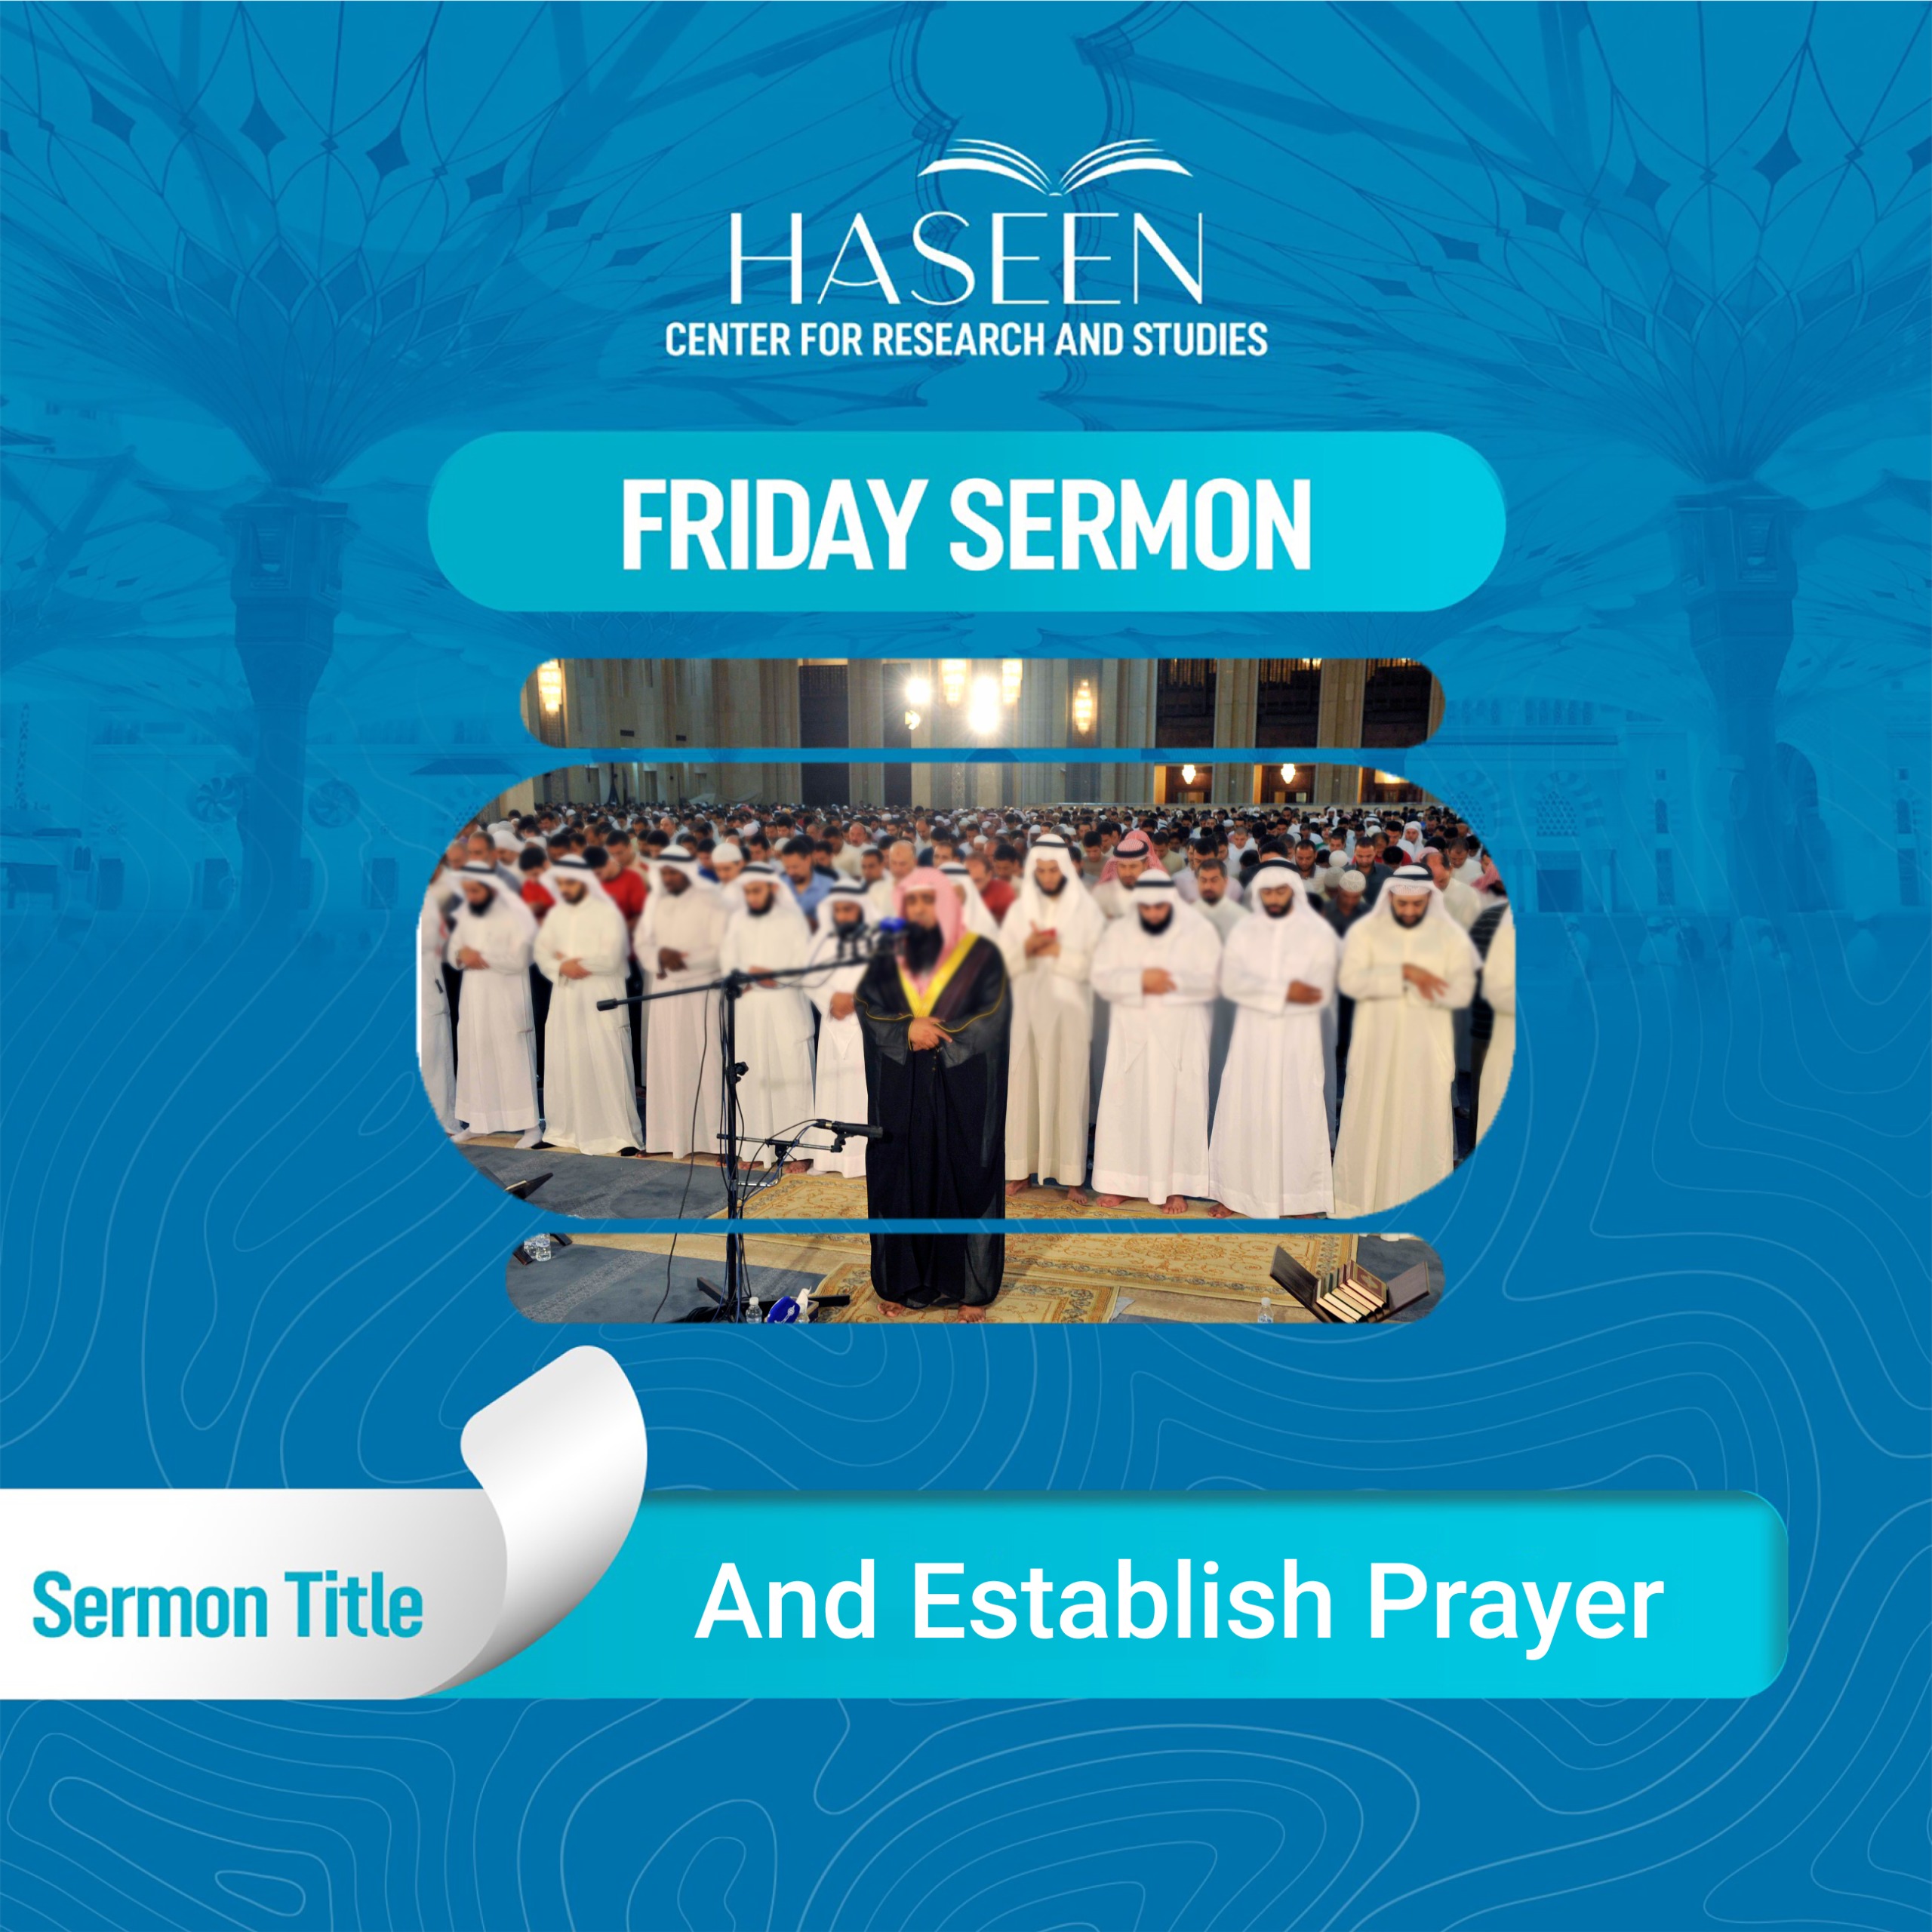 Title of Sermon: "And Establish Prayer"